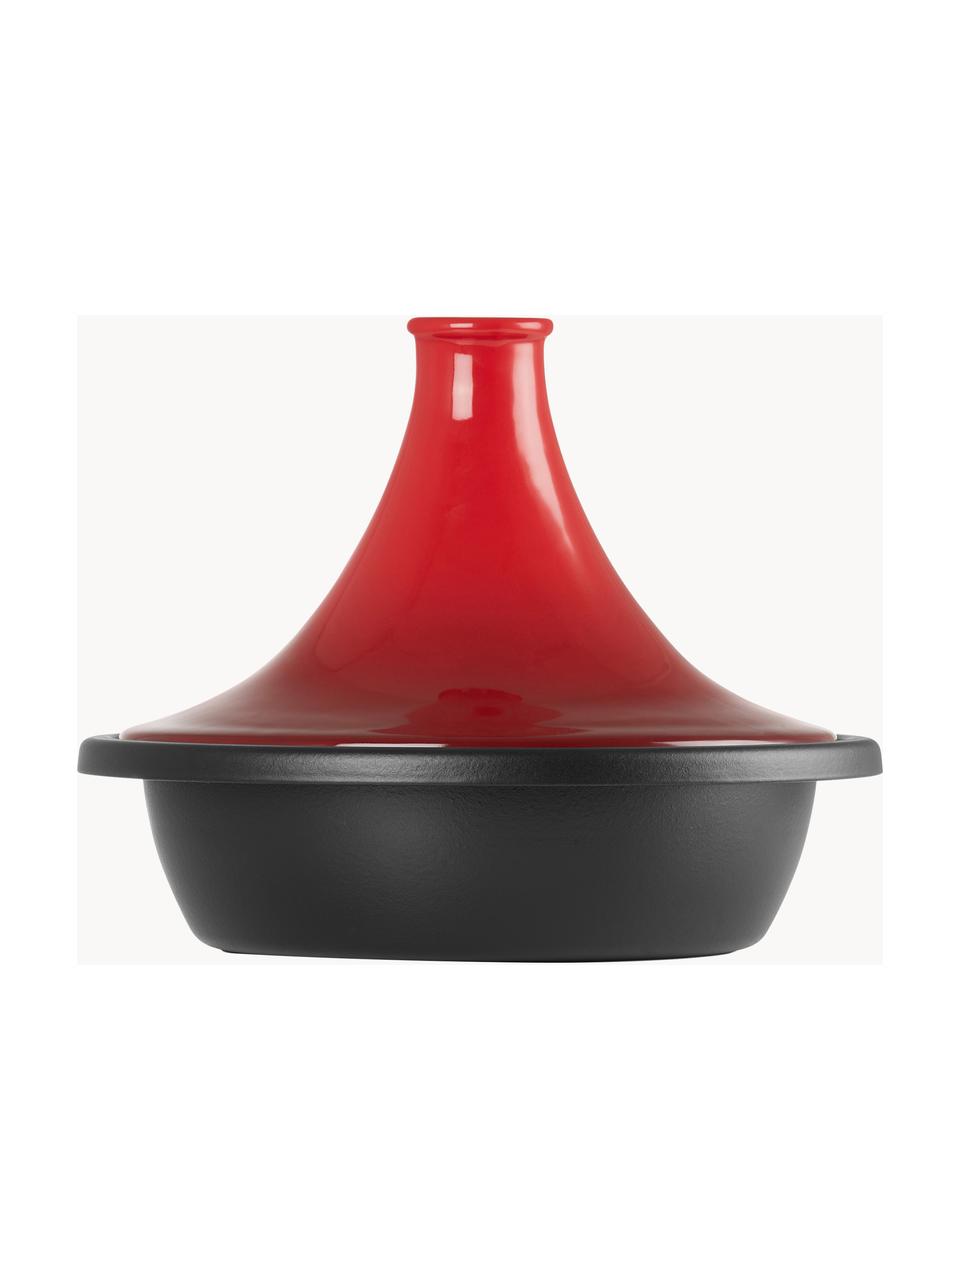 Tagine pot Creuset, Deksel: keramiek, Pot: ijzer, geëmailleerd, Rood, zwart, Ø 32 cm x H 31 cm, 3,7 L